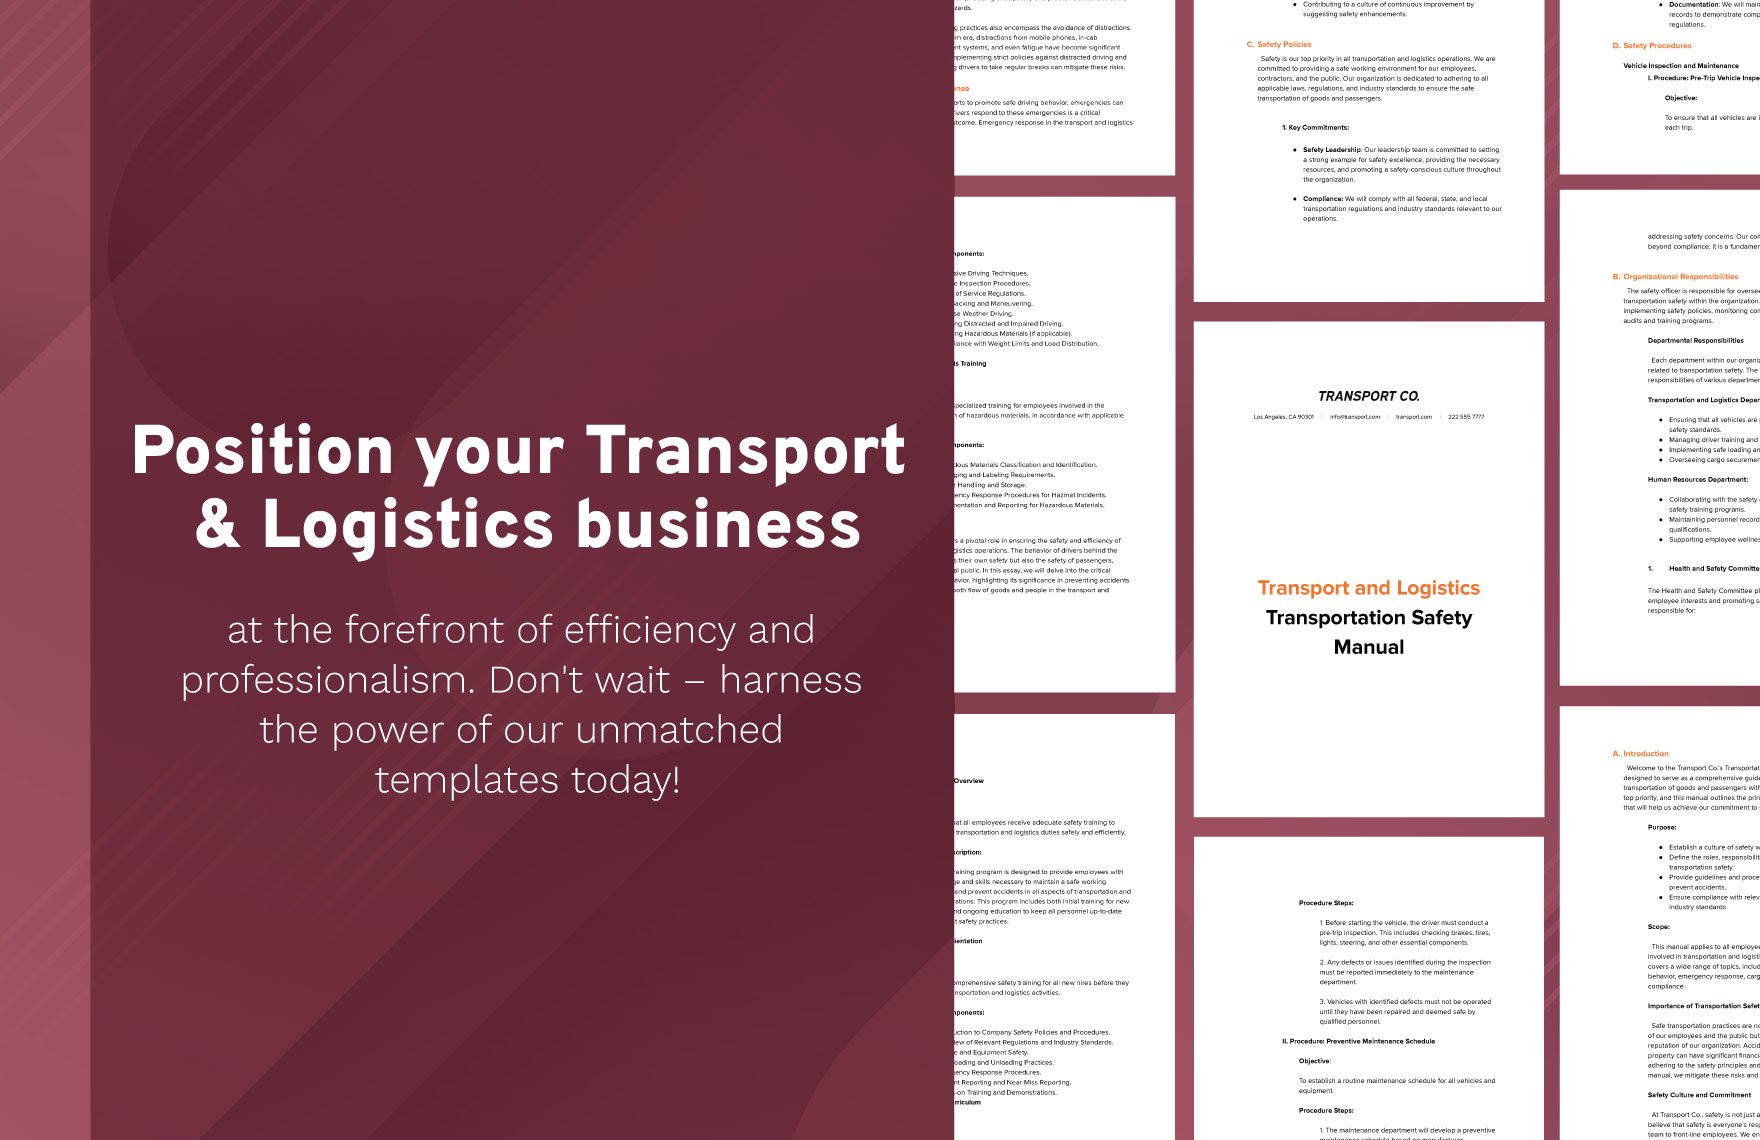 Transport and Logistics Transportation Safety Manual Template